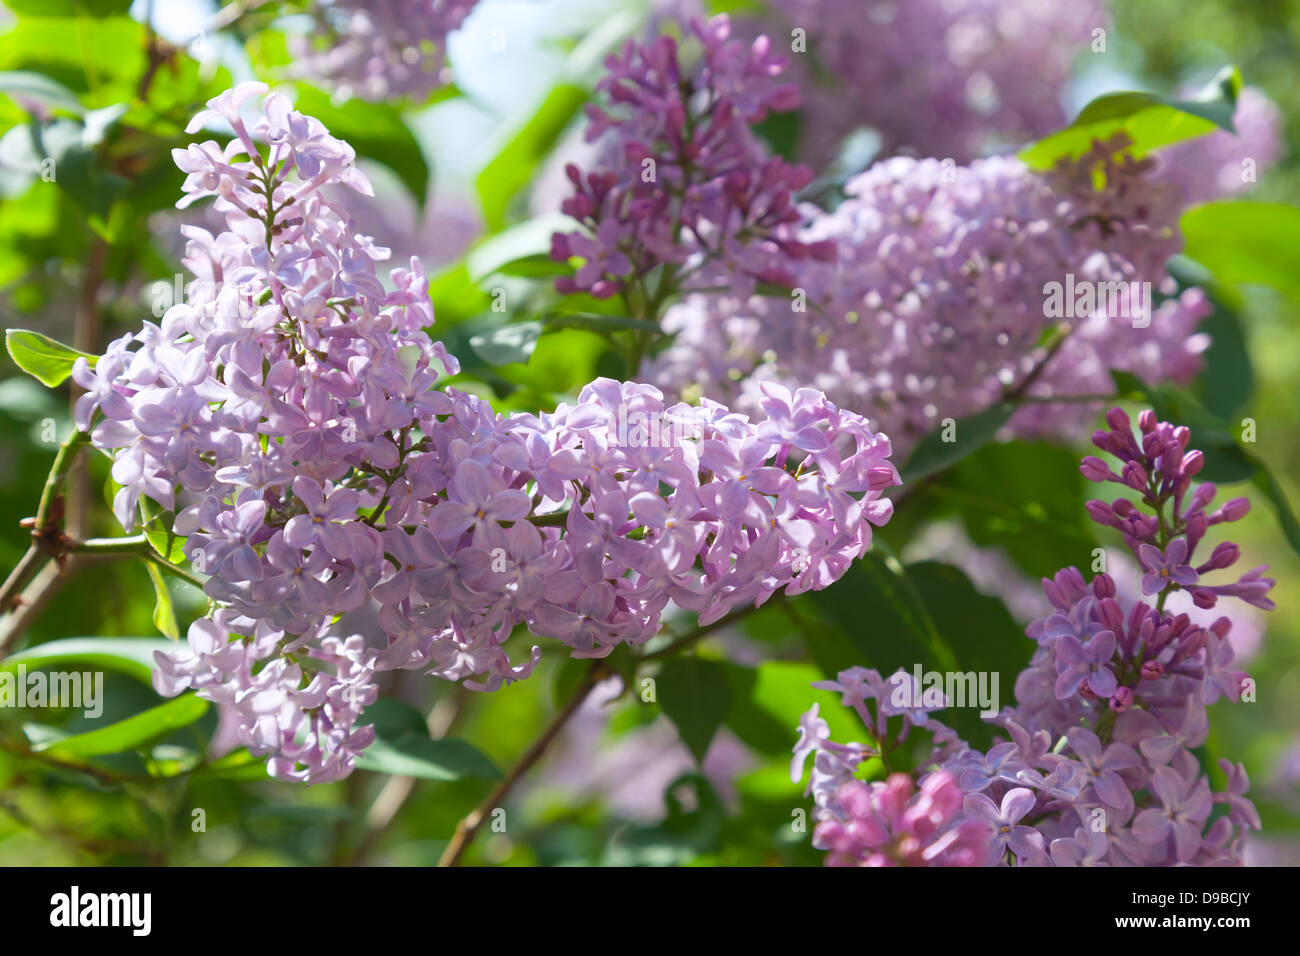 Naturaleza de fondo de verano con el ramal de frescas flores lila Foto de stock